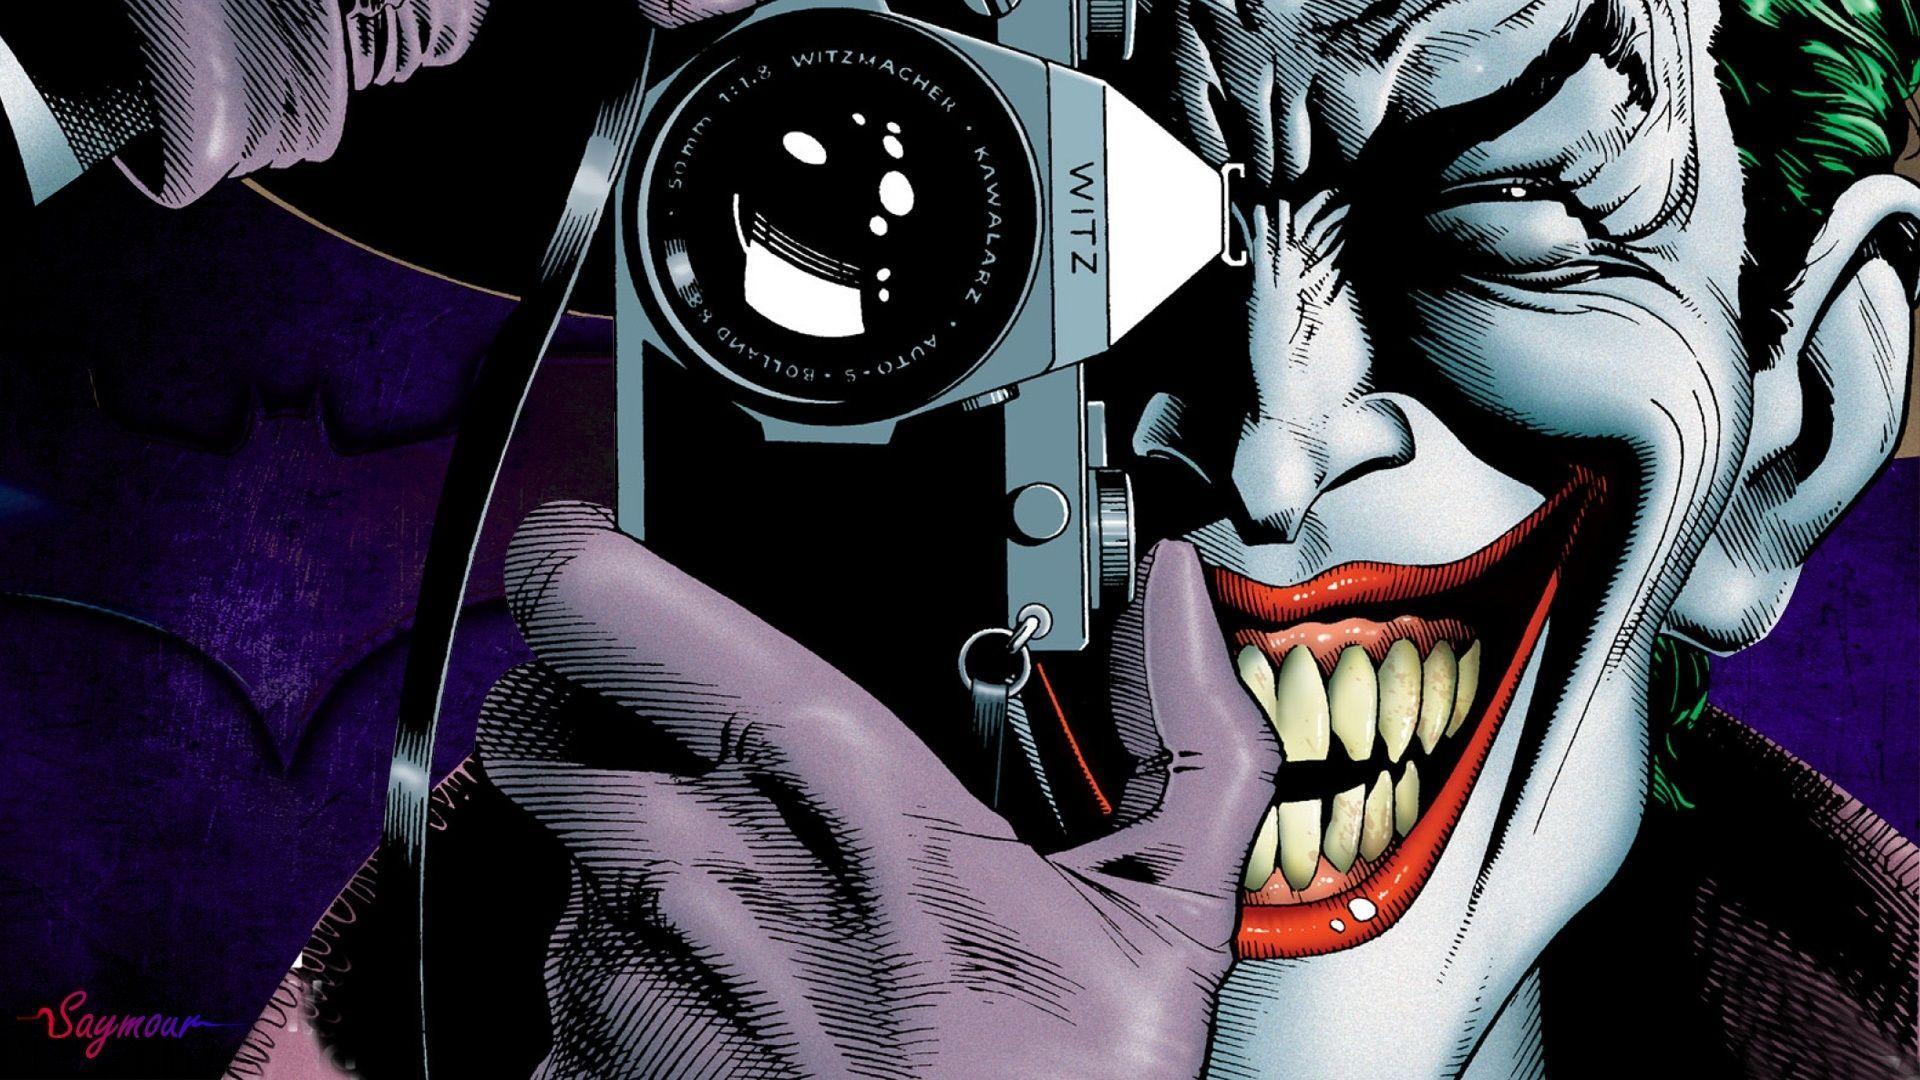 batman joker hd wallpapers 1080p